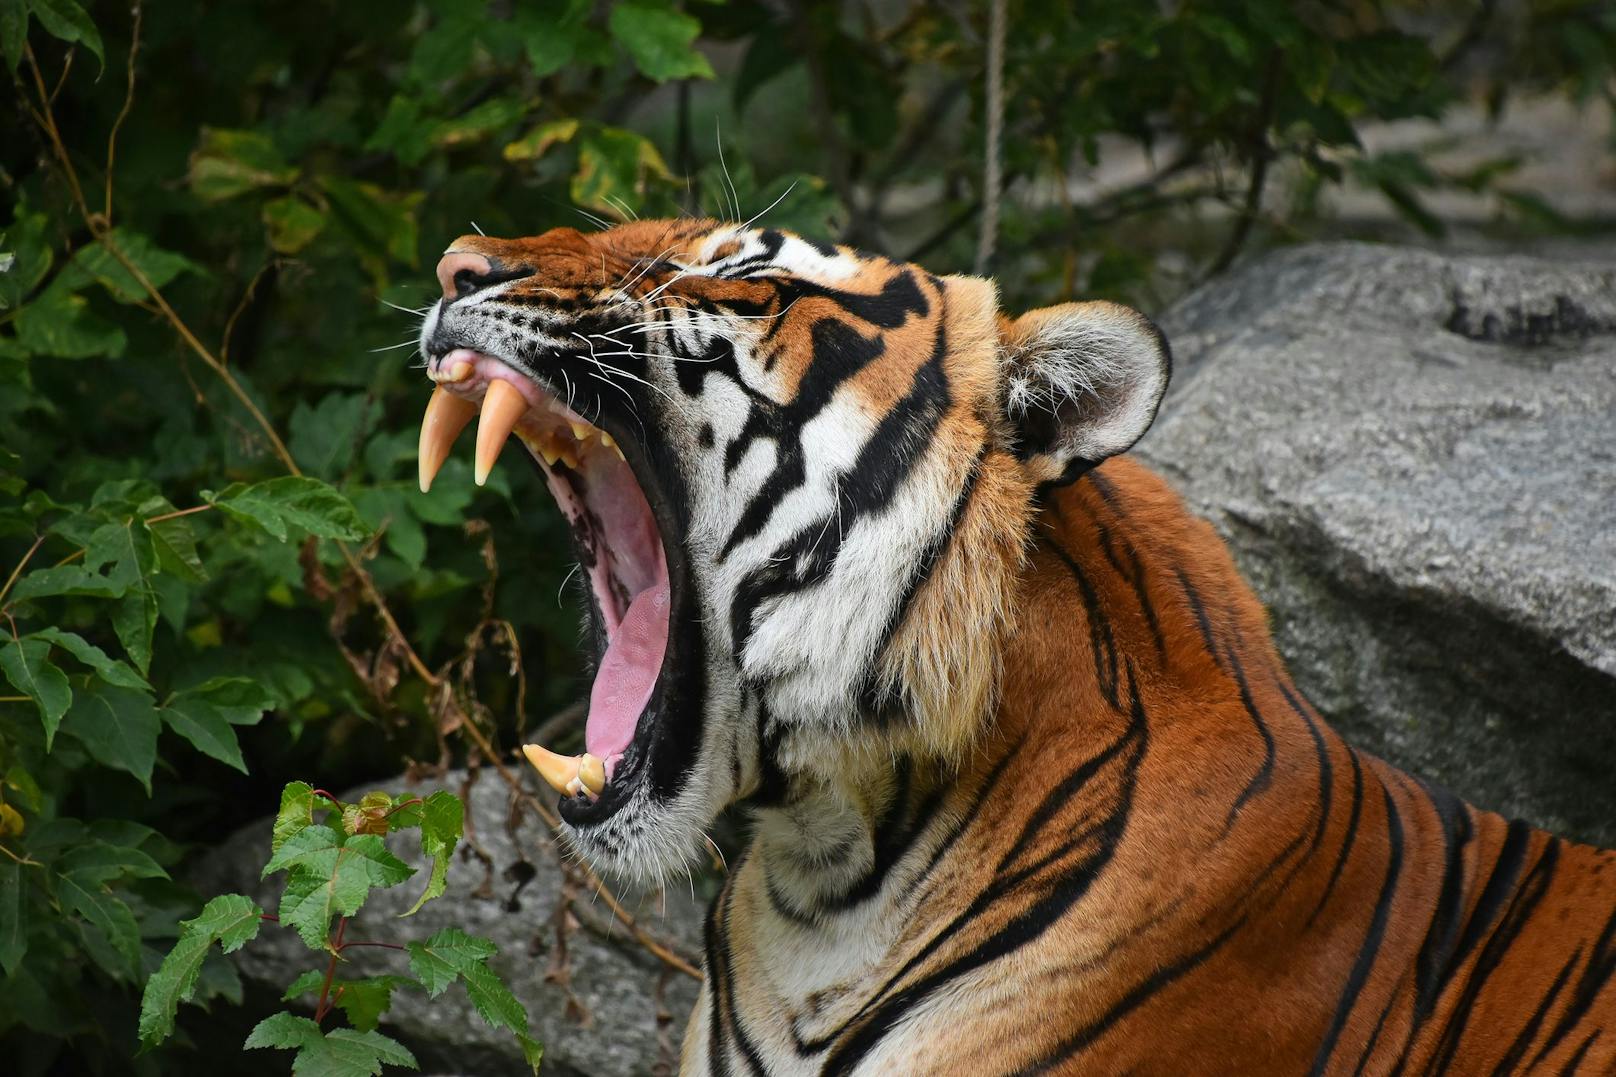 25-Jährige kämpft mit Tiger ums eigene Kind